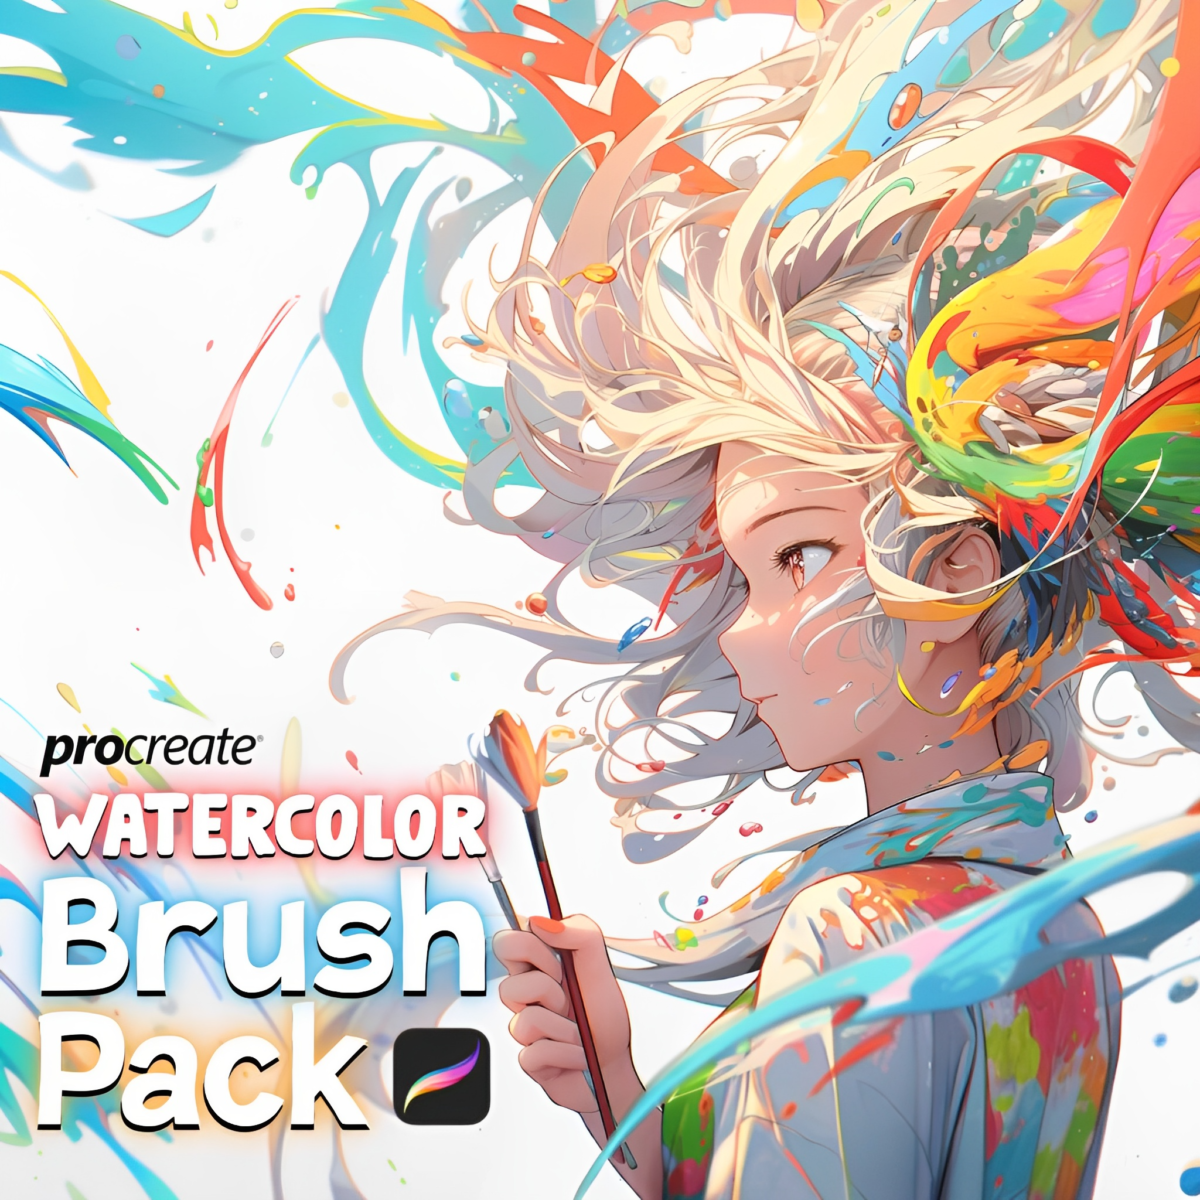 Free anime Bokeh brush pack part 2  فرش بروكريت مجانا  Free Brushes for  Procreate  YouTube